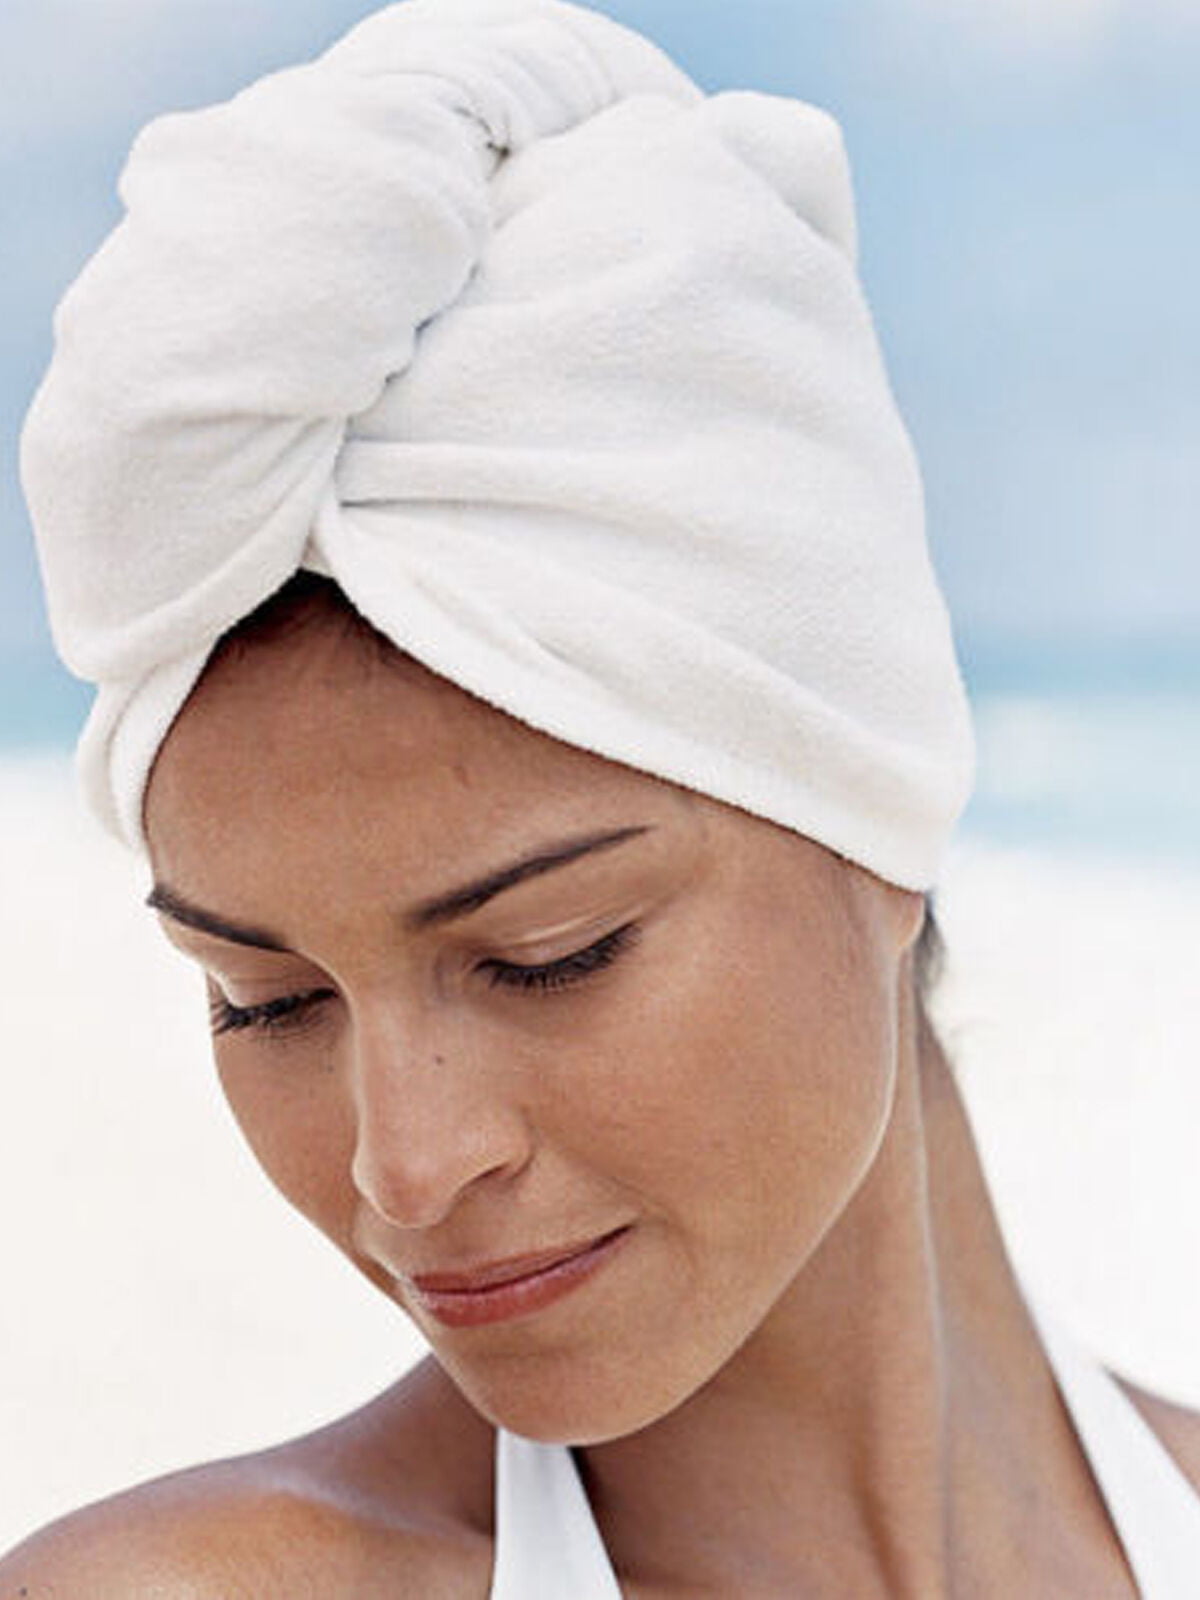 Hot Microfiber Towel Quick Dry Hair Magic Drying Turban Wrap Hat Caps Bathing 